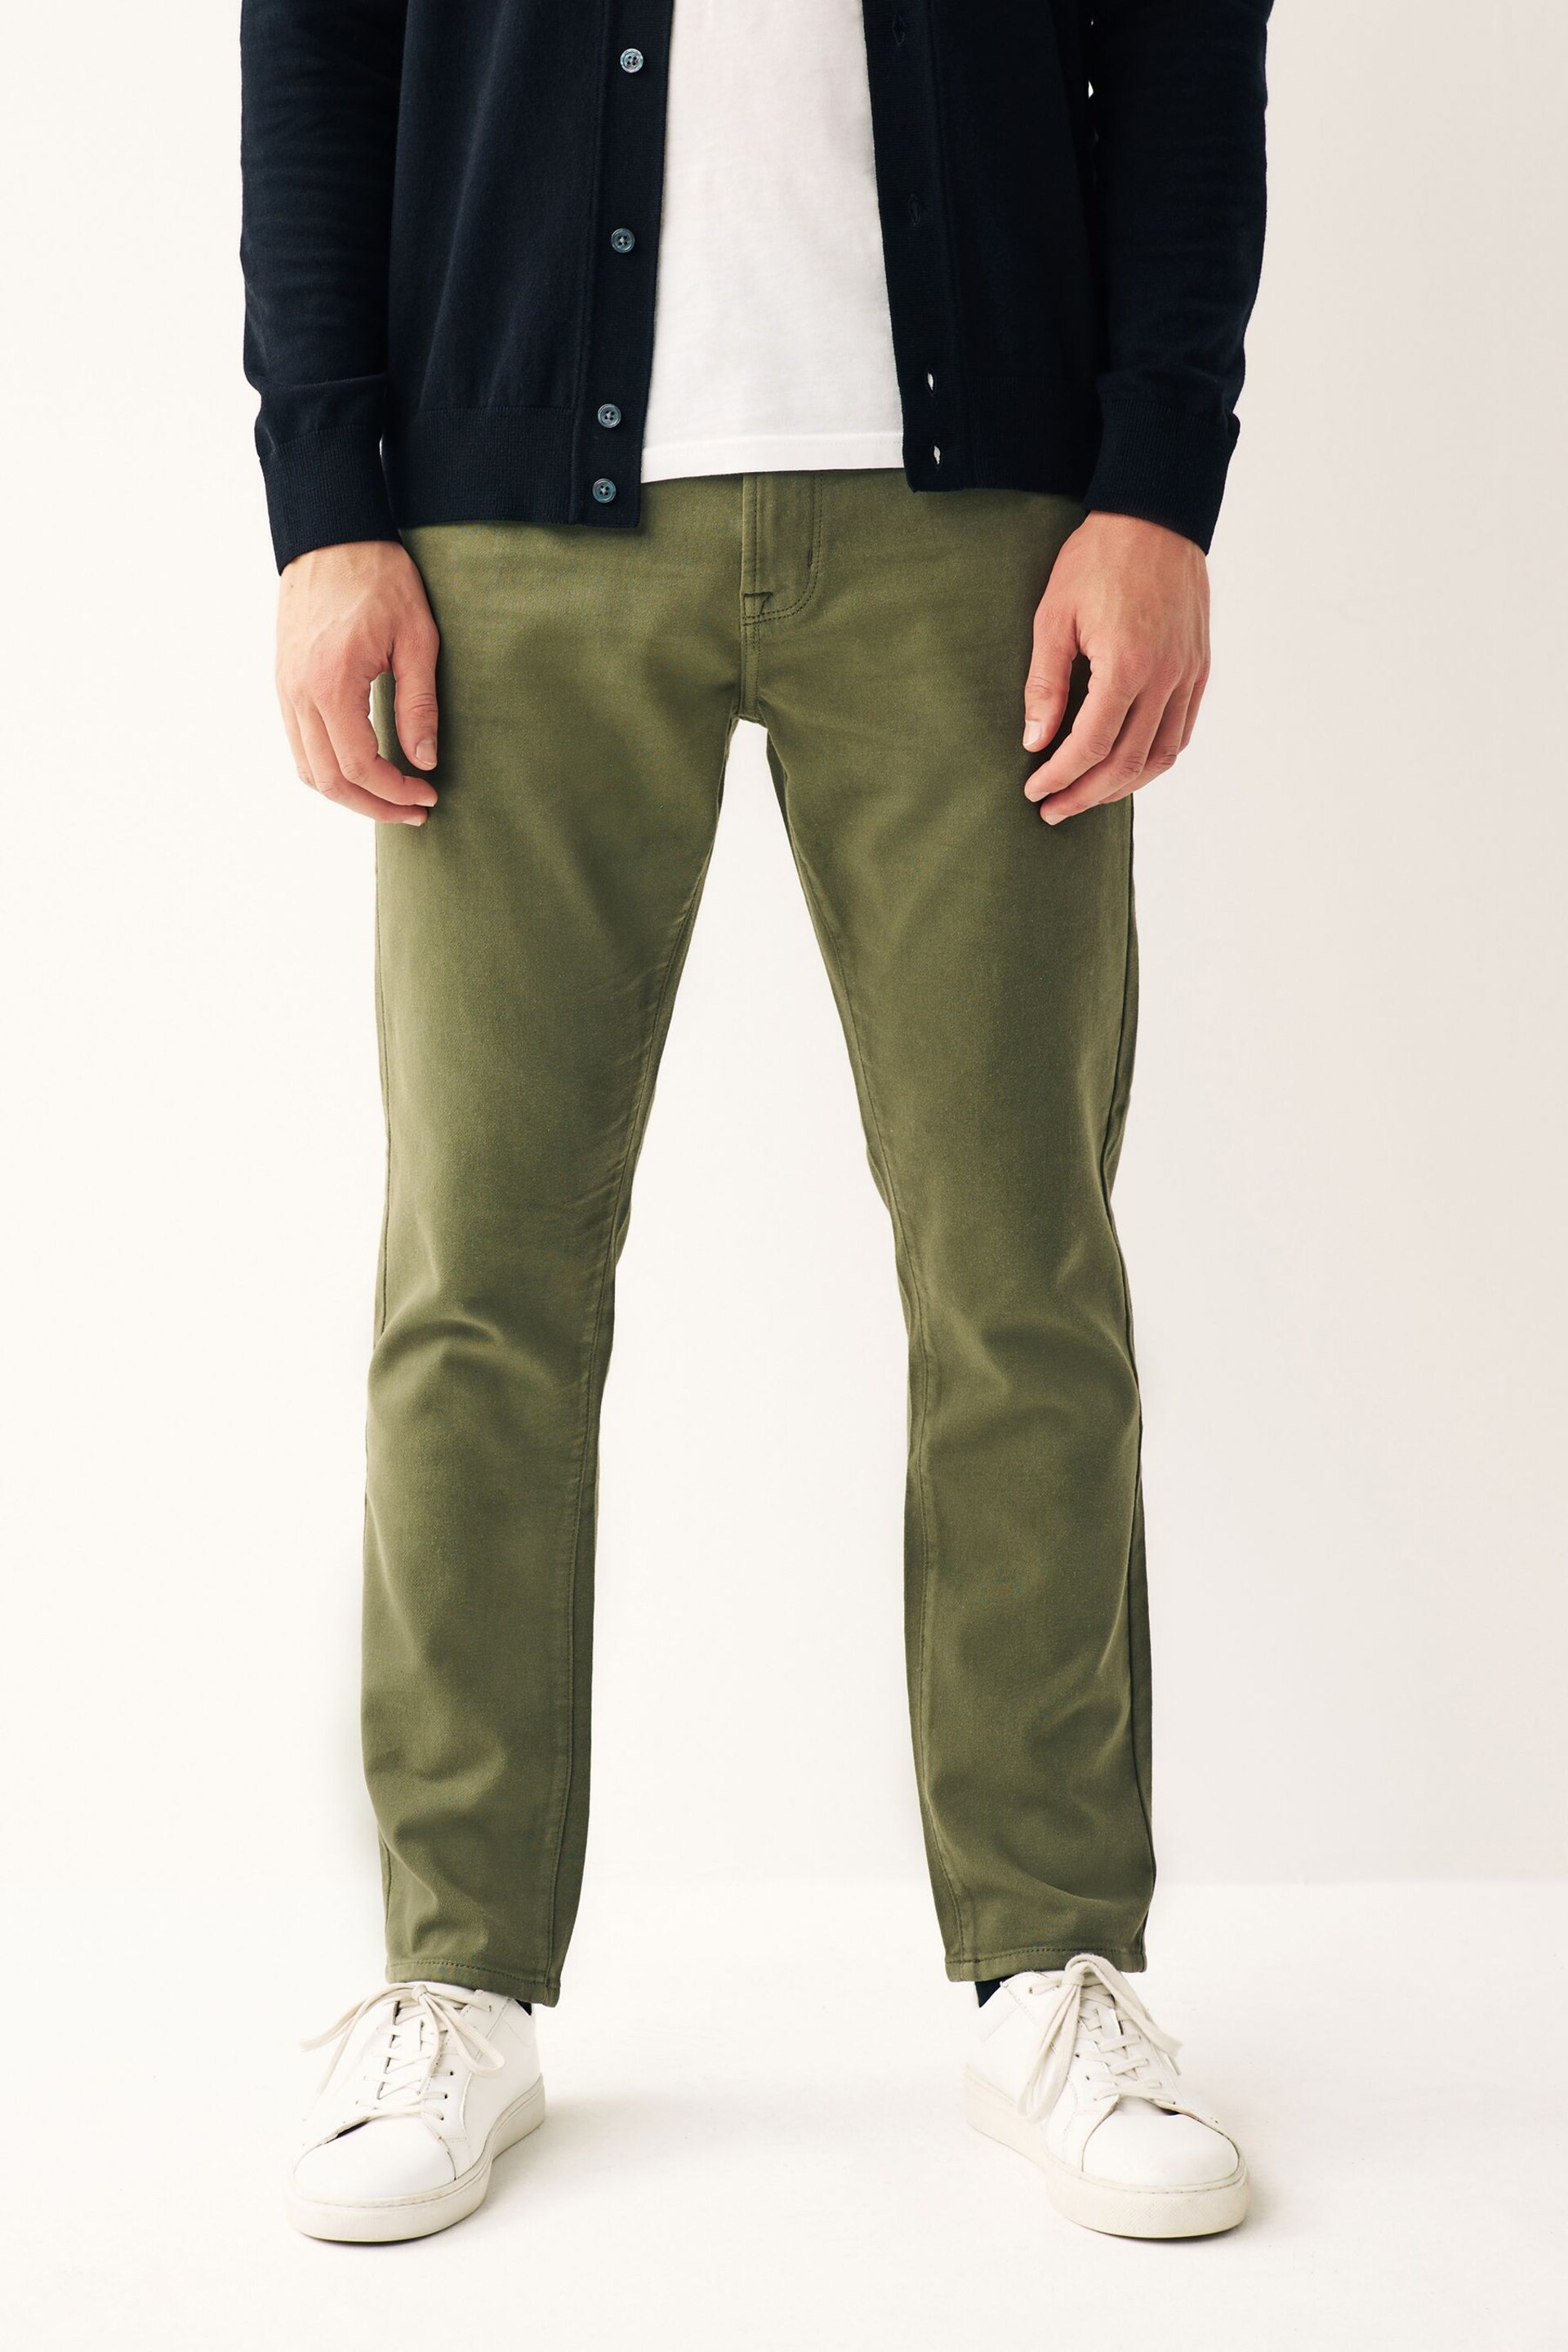 Green Sage Slim Fit Comfort Stretch Jeans - Image 1 of 6